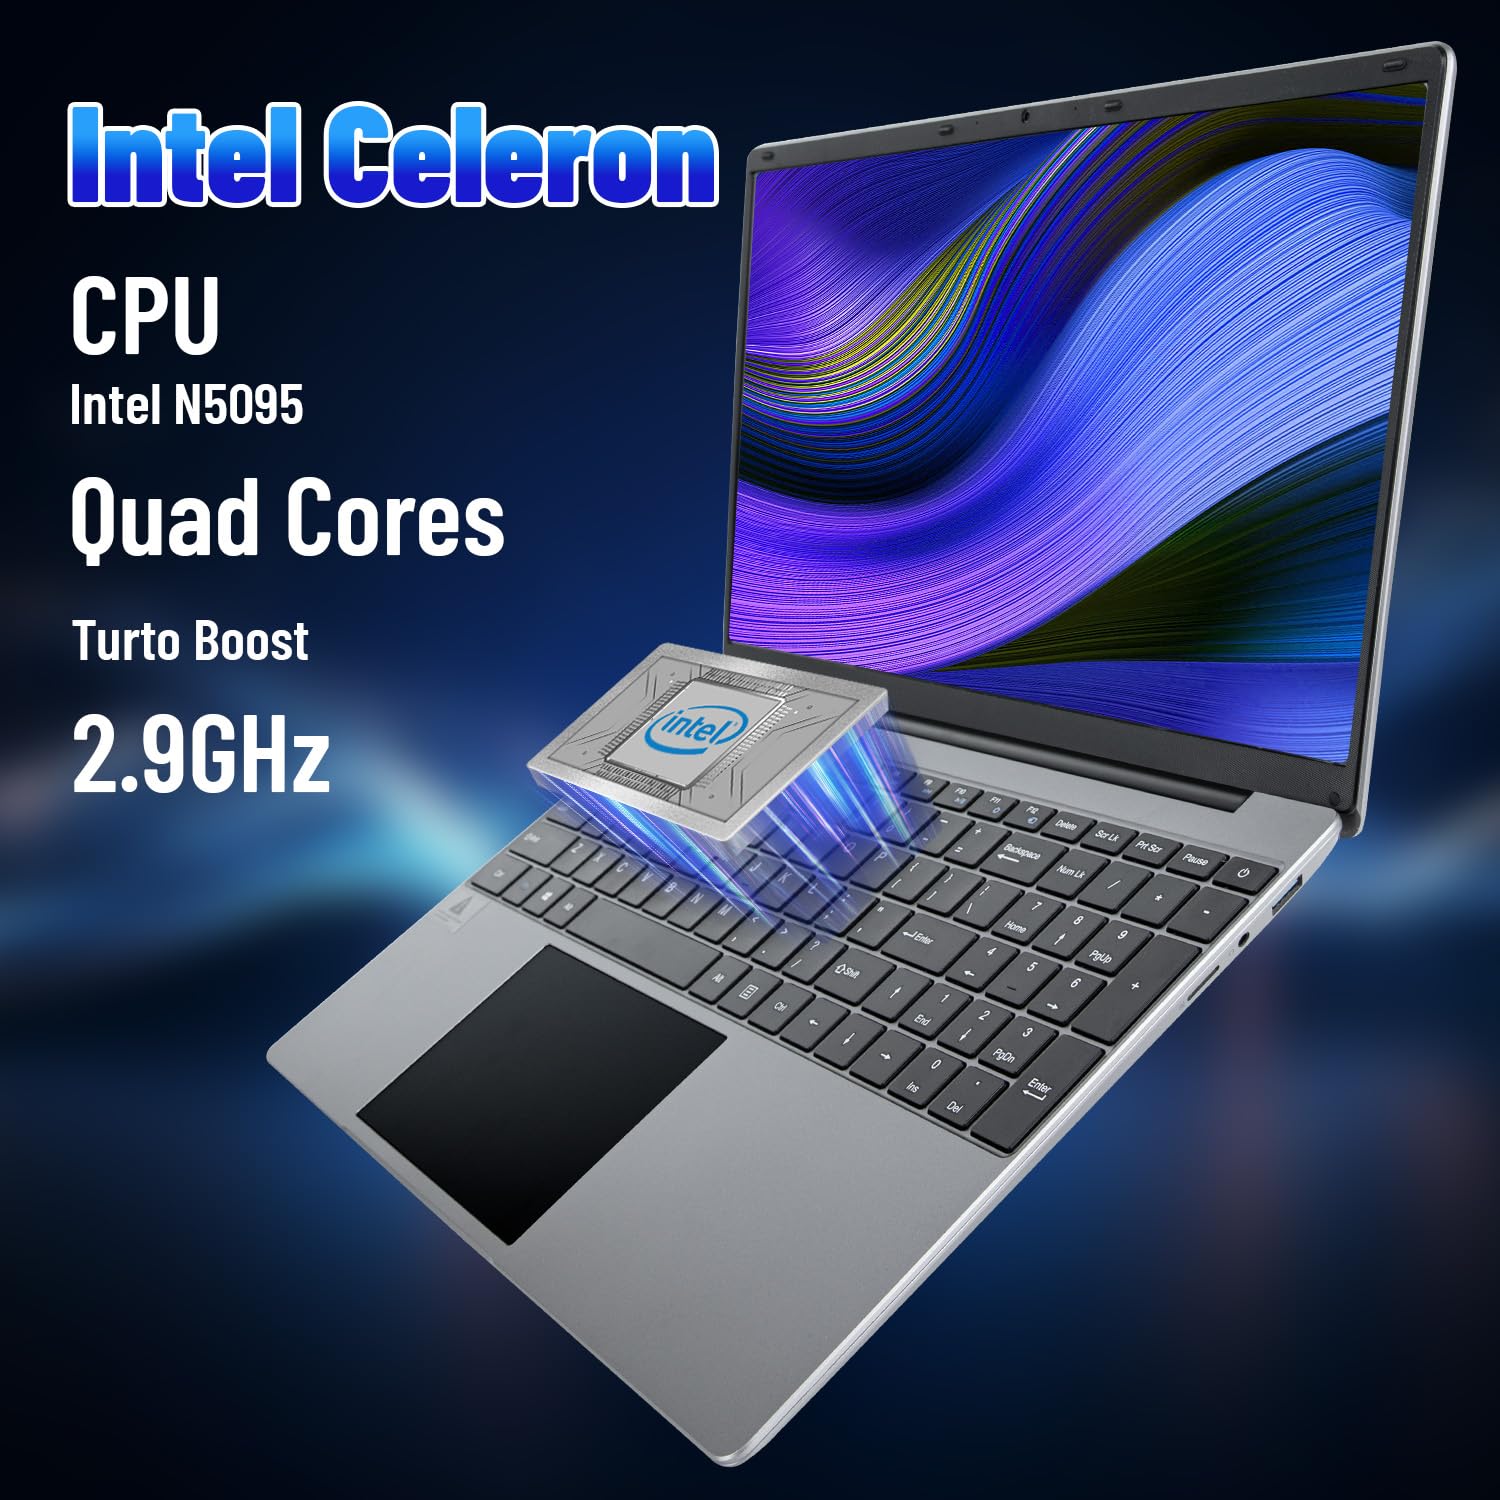 URAO Laptop, 15.6 Inch Windows 11 Intel Celeron N5095 Quad-Core Processor up to 2.9Ghz, 8GB DDR4 256GB SSD Laptop Computer,2.4/5G WiFi, Bluetooth 4.2,Mini HDMI,2xUSB 3.0,Type-C,Numeric Keypad